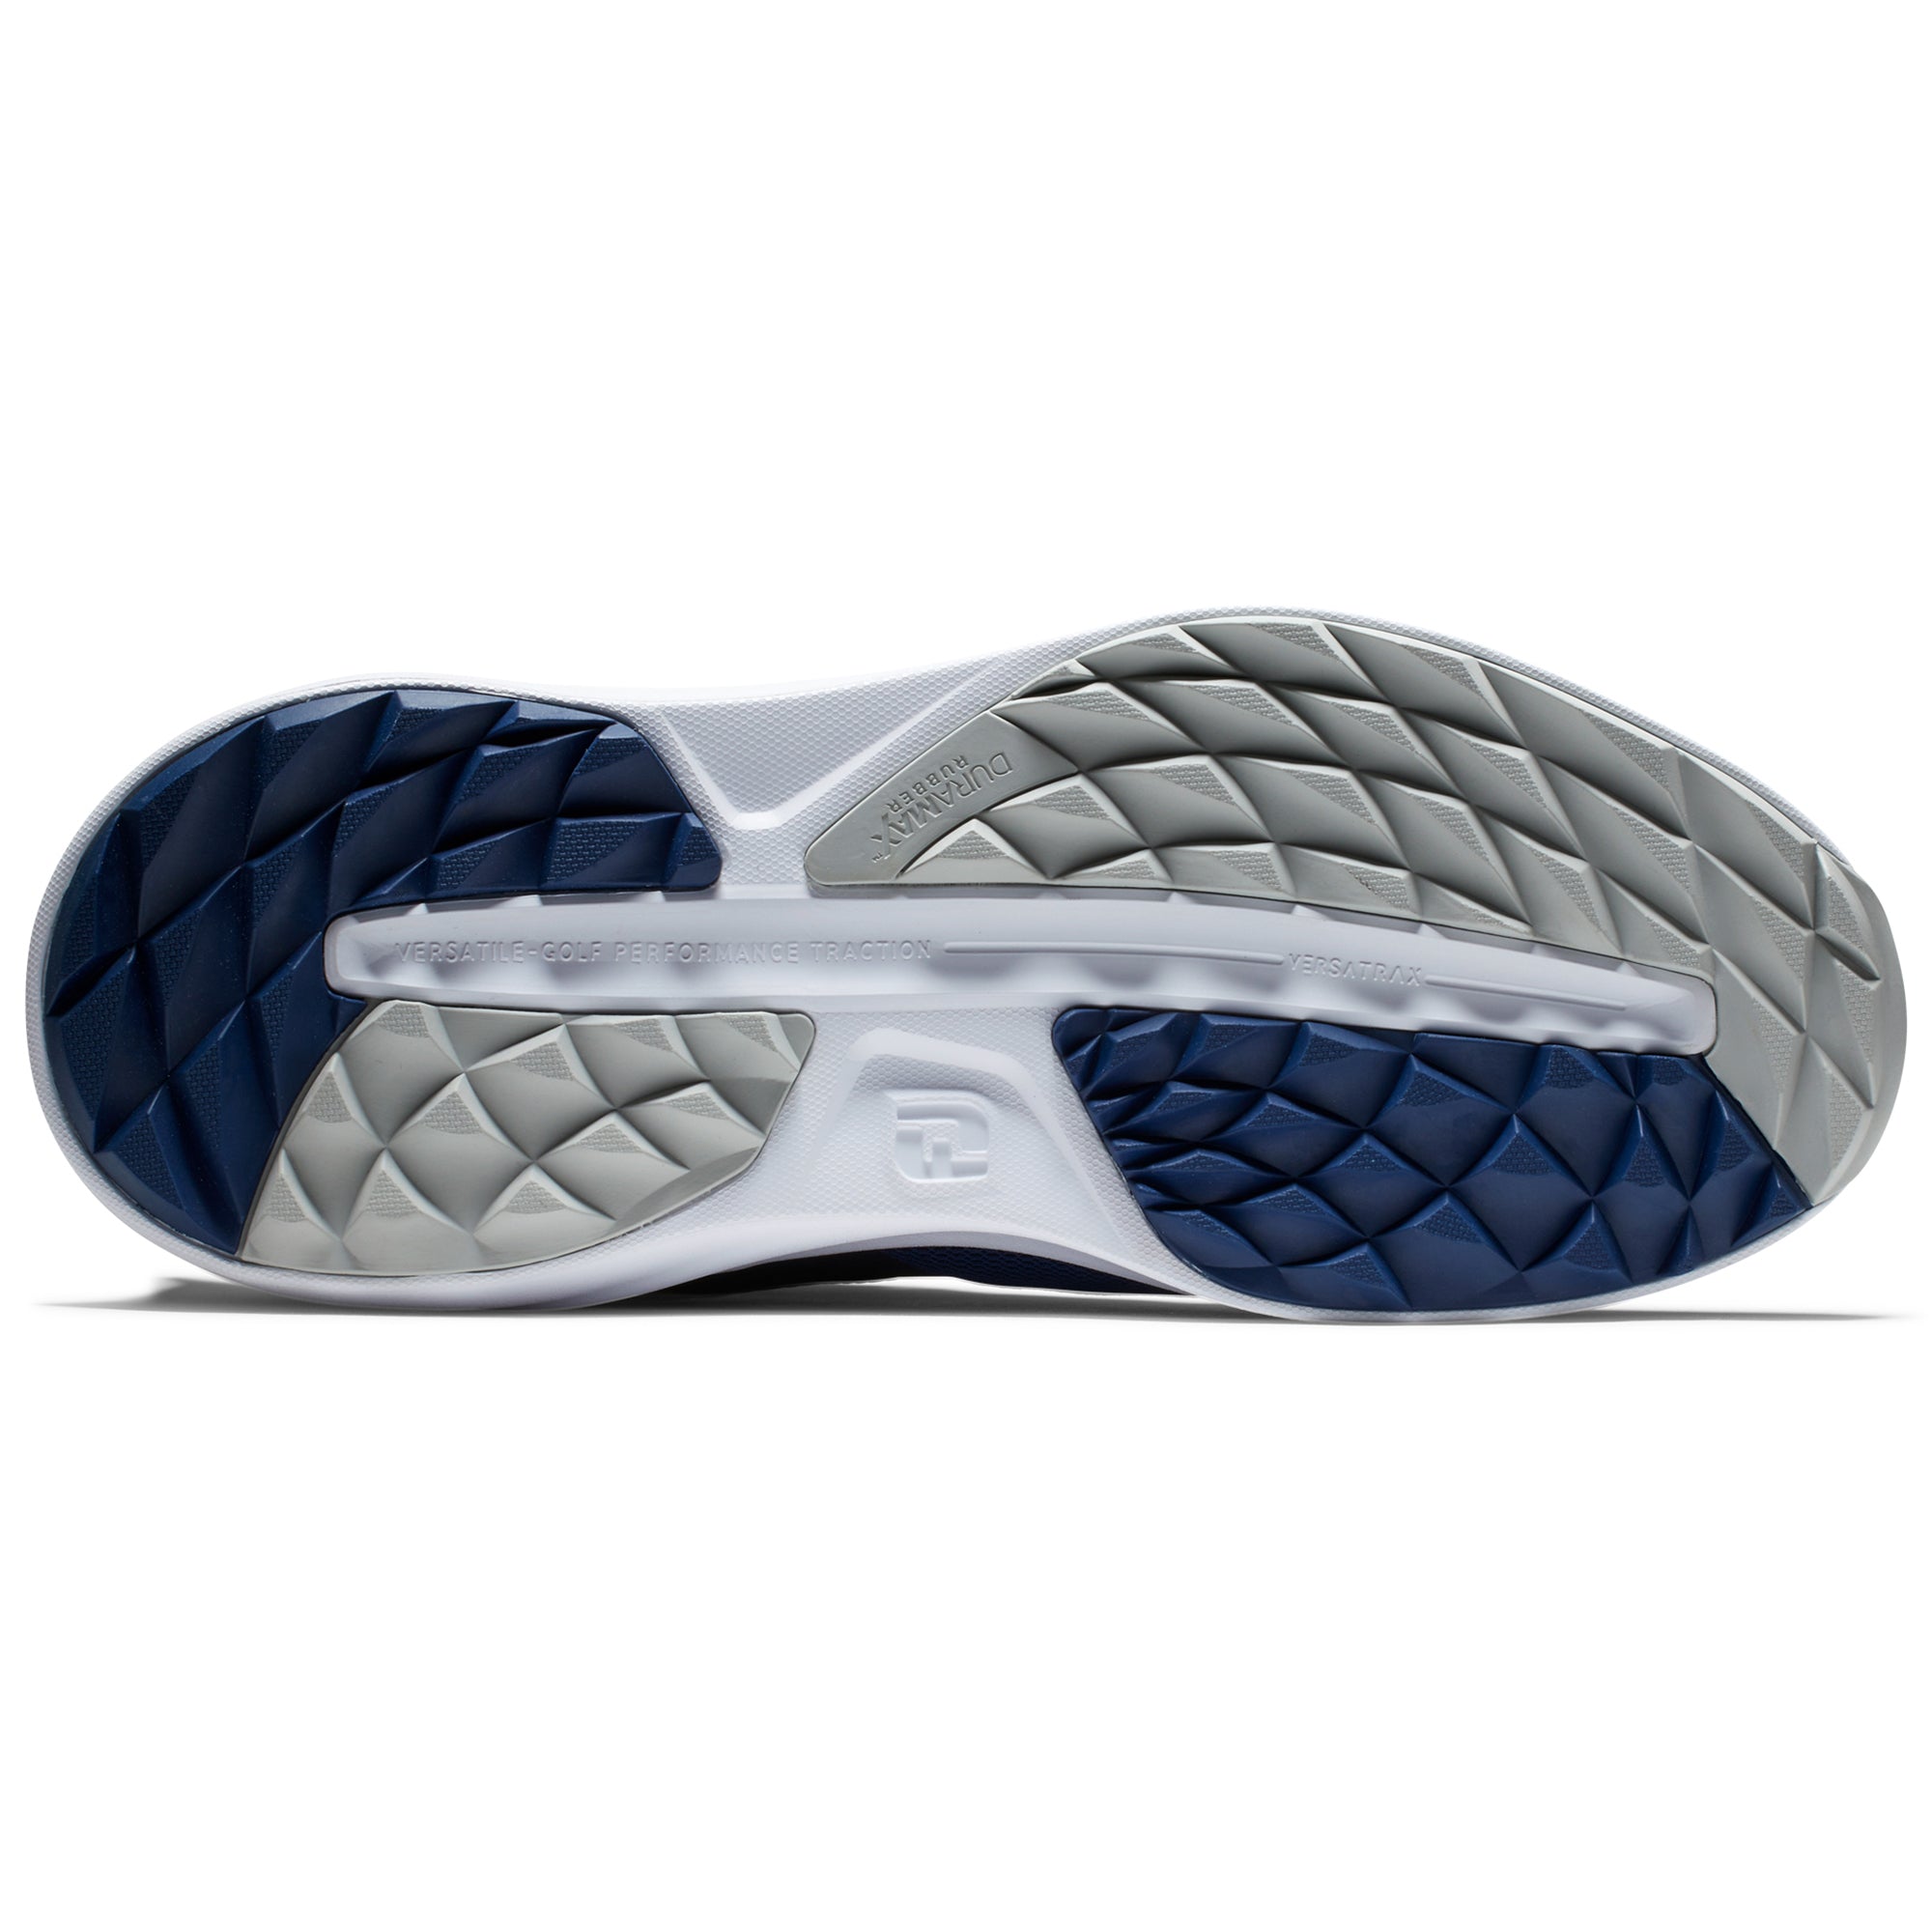 footjoy-fj-flex-golf-shoes-56285-navy-grey-white